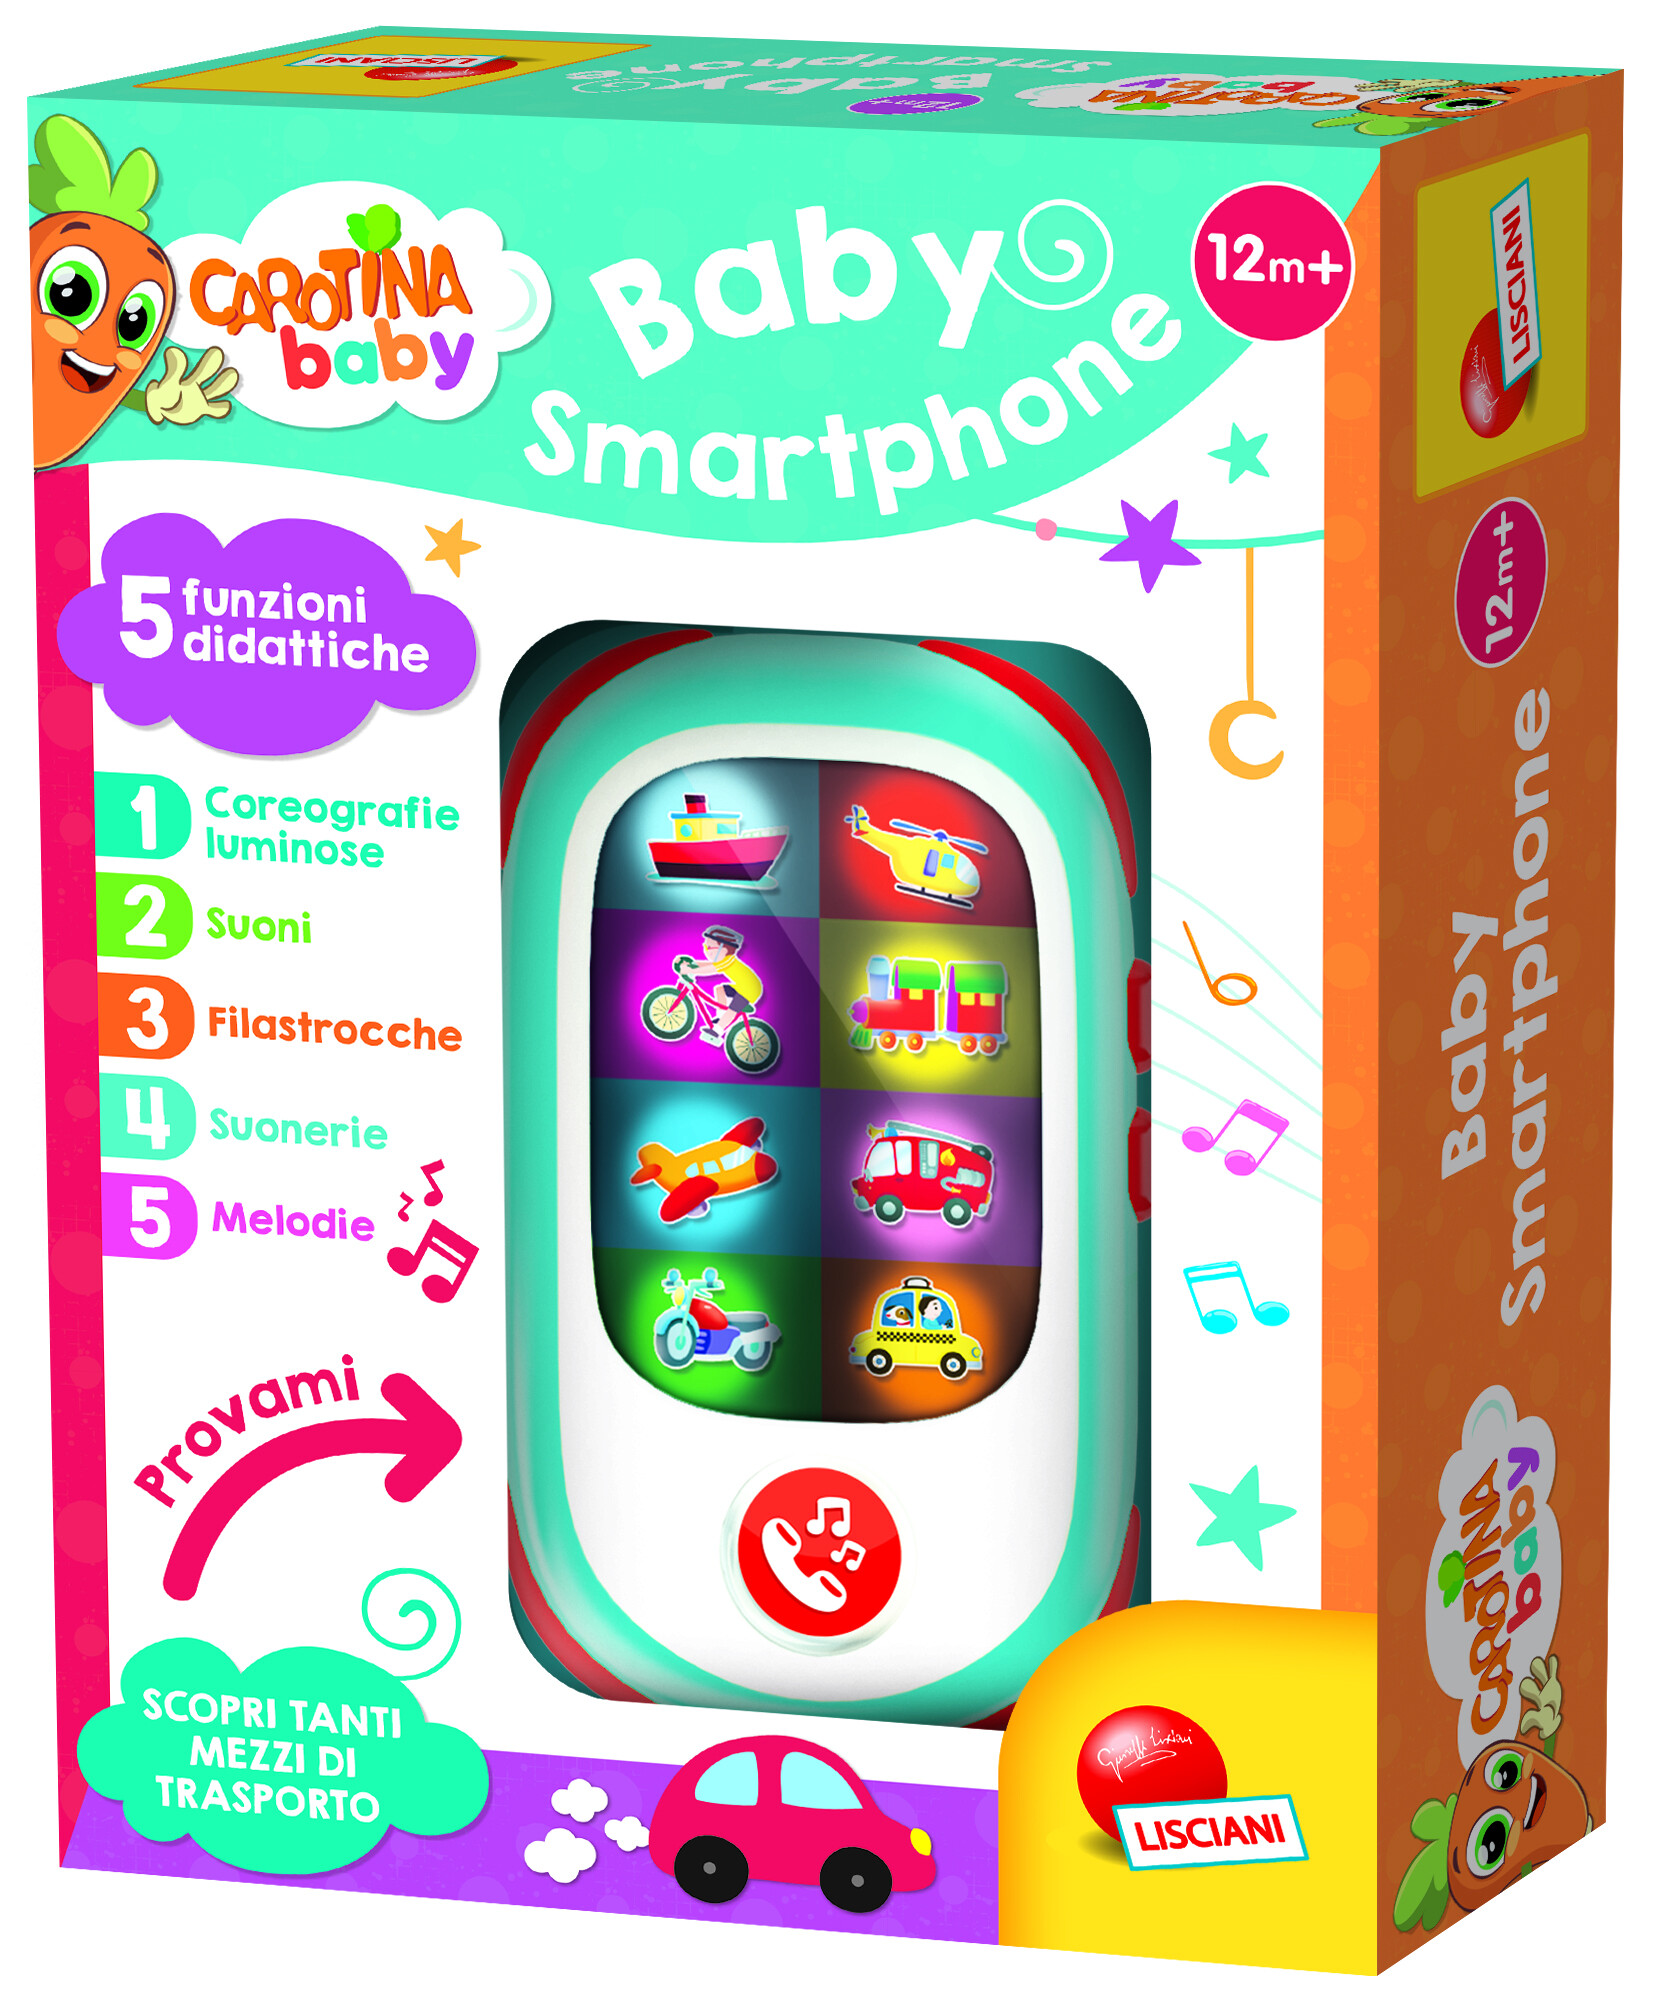 Carotina baby smartphone led - LISCIANI